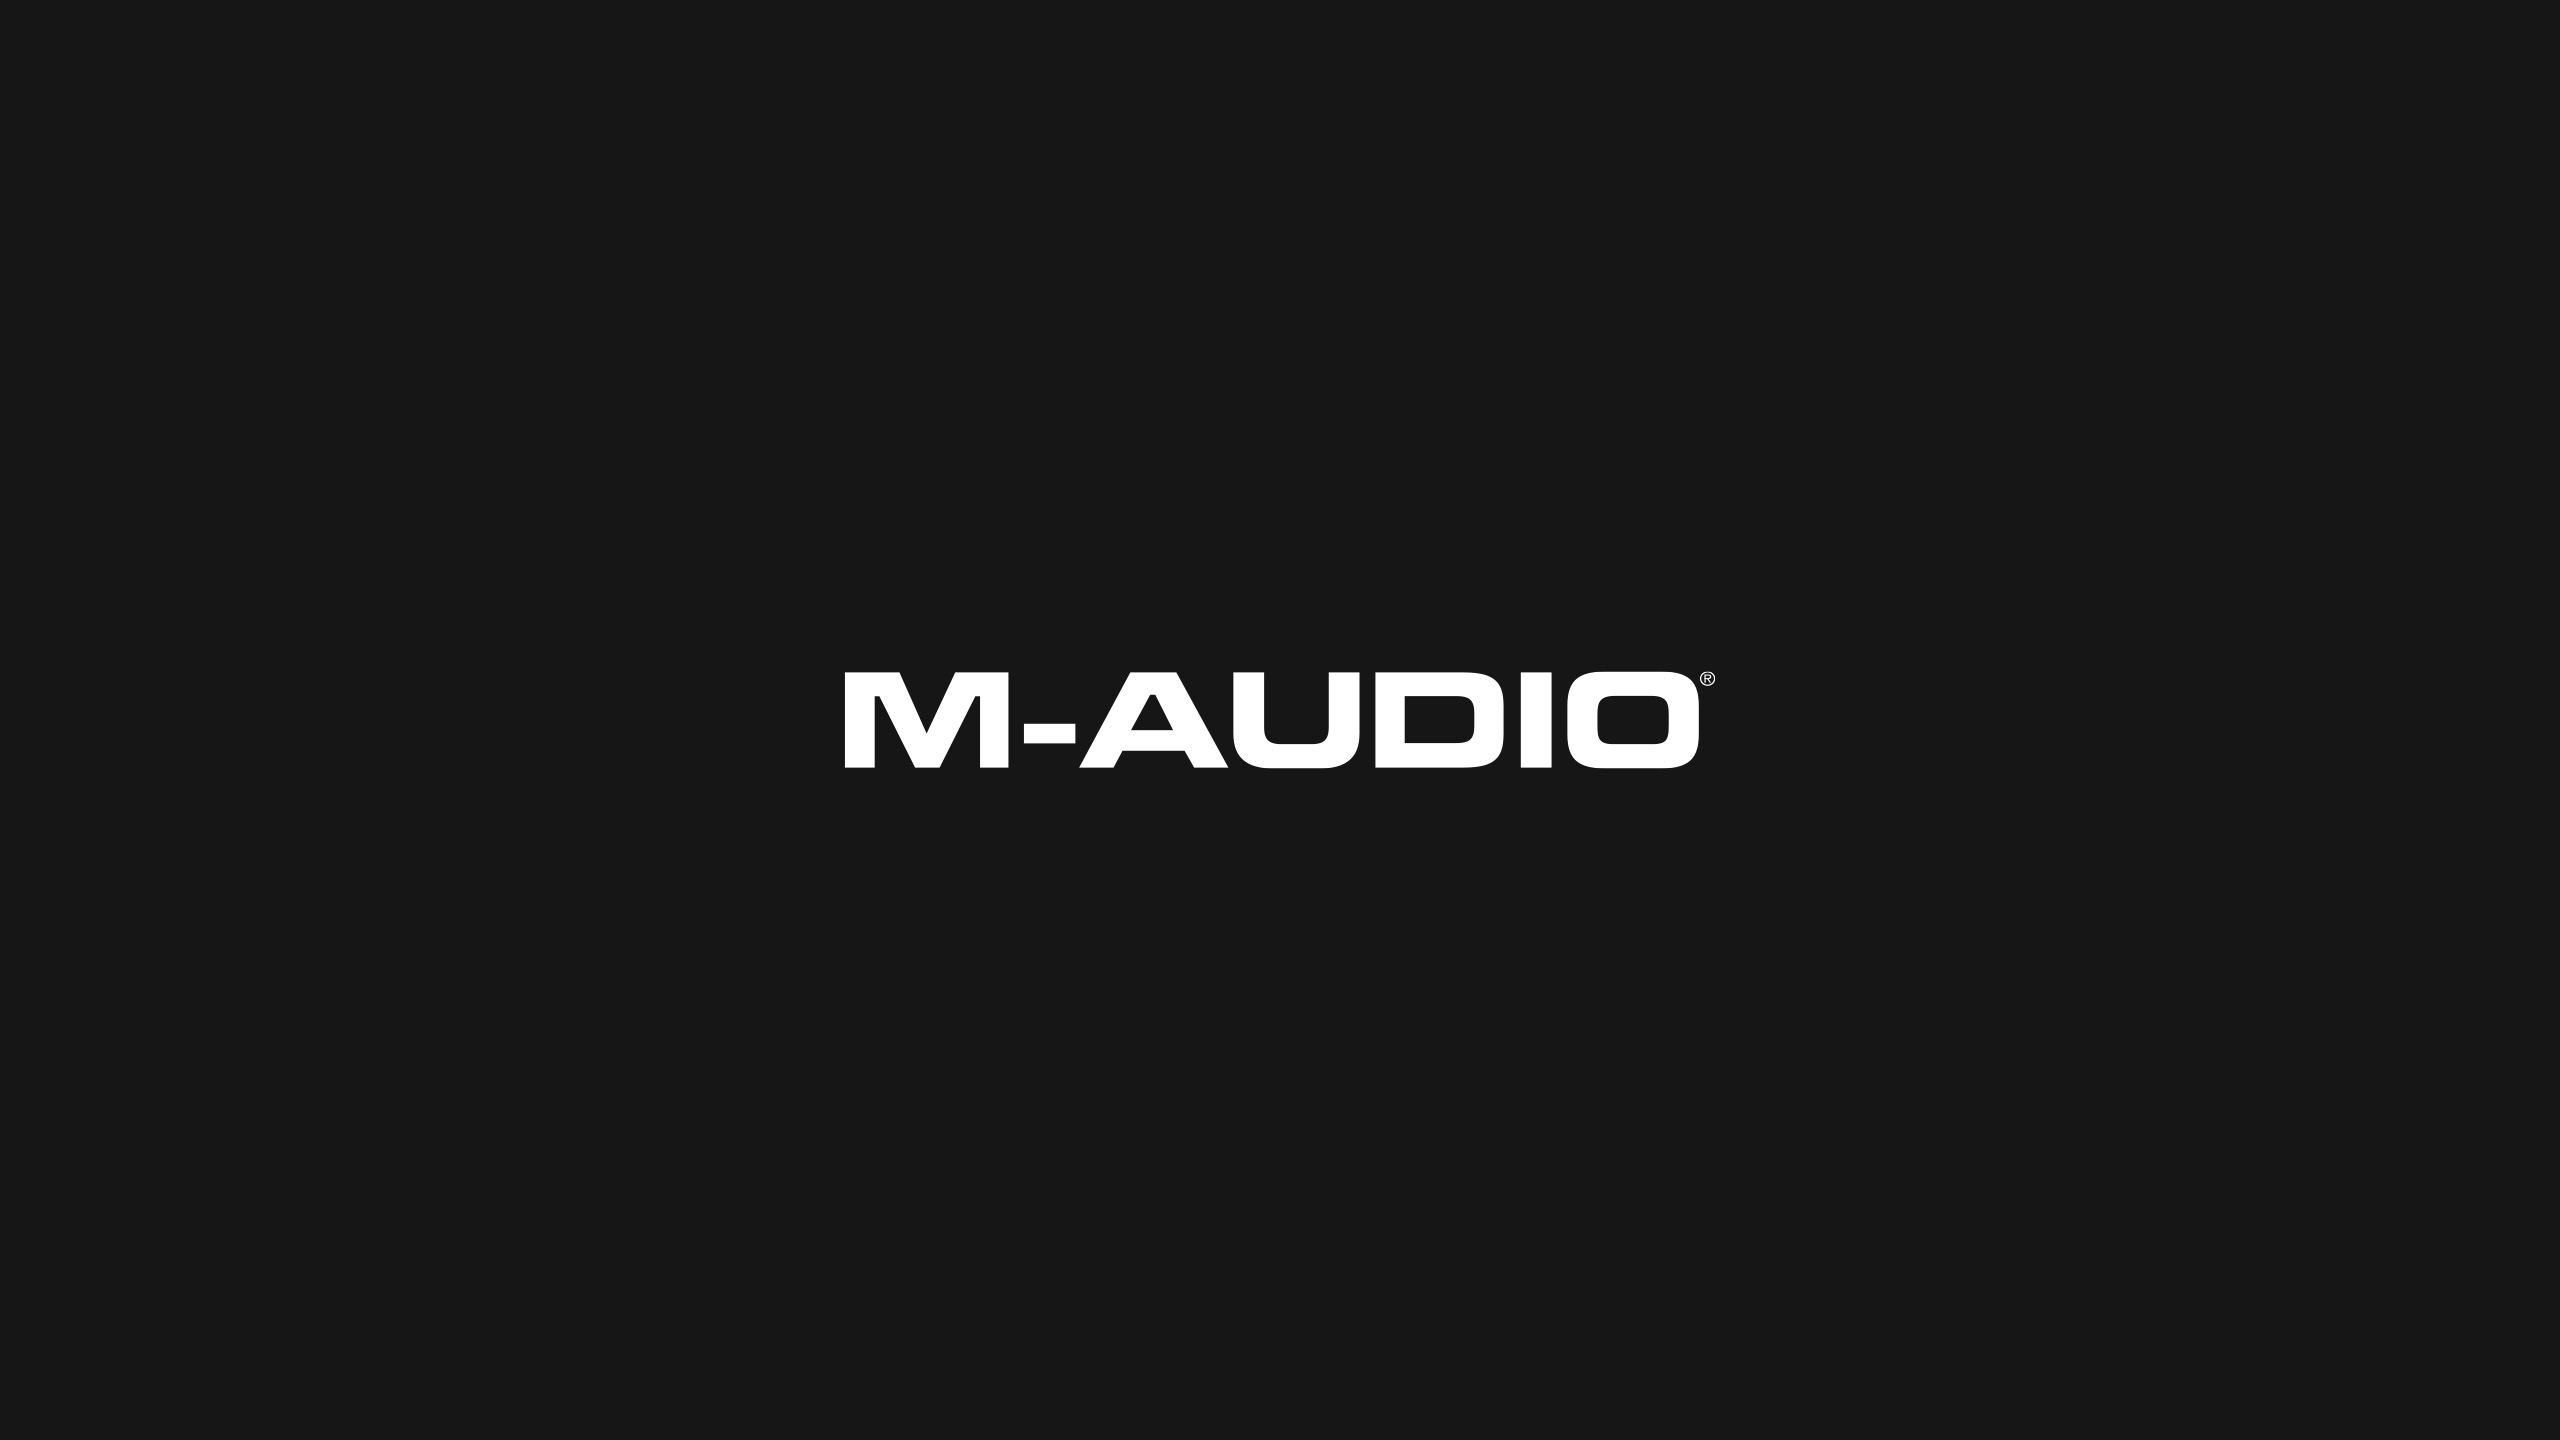 General 2560x1440 audio music sound speakers headphones m-audio black background simple background